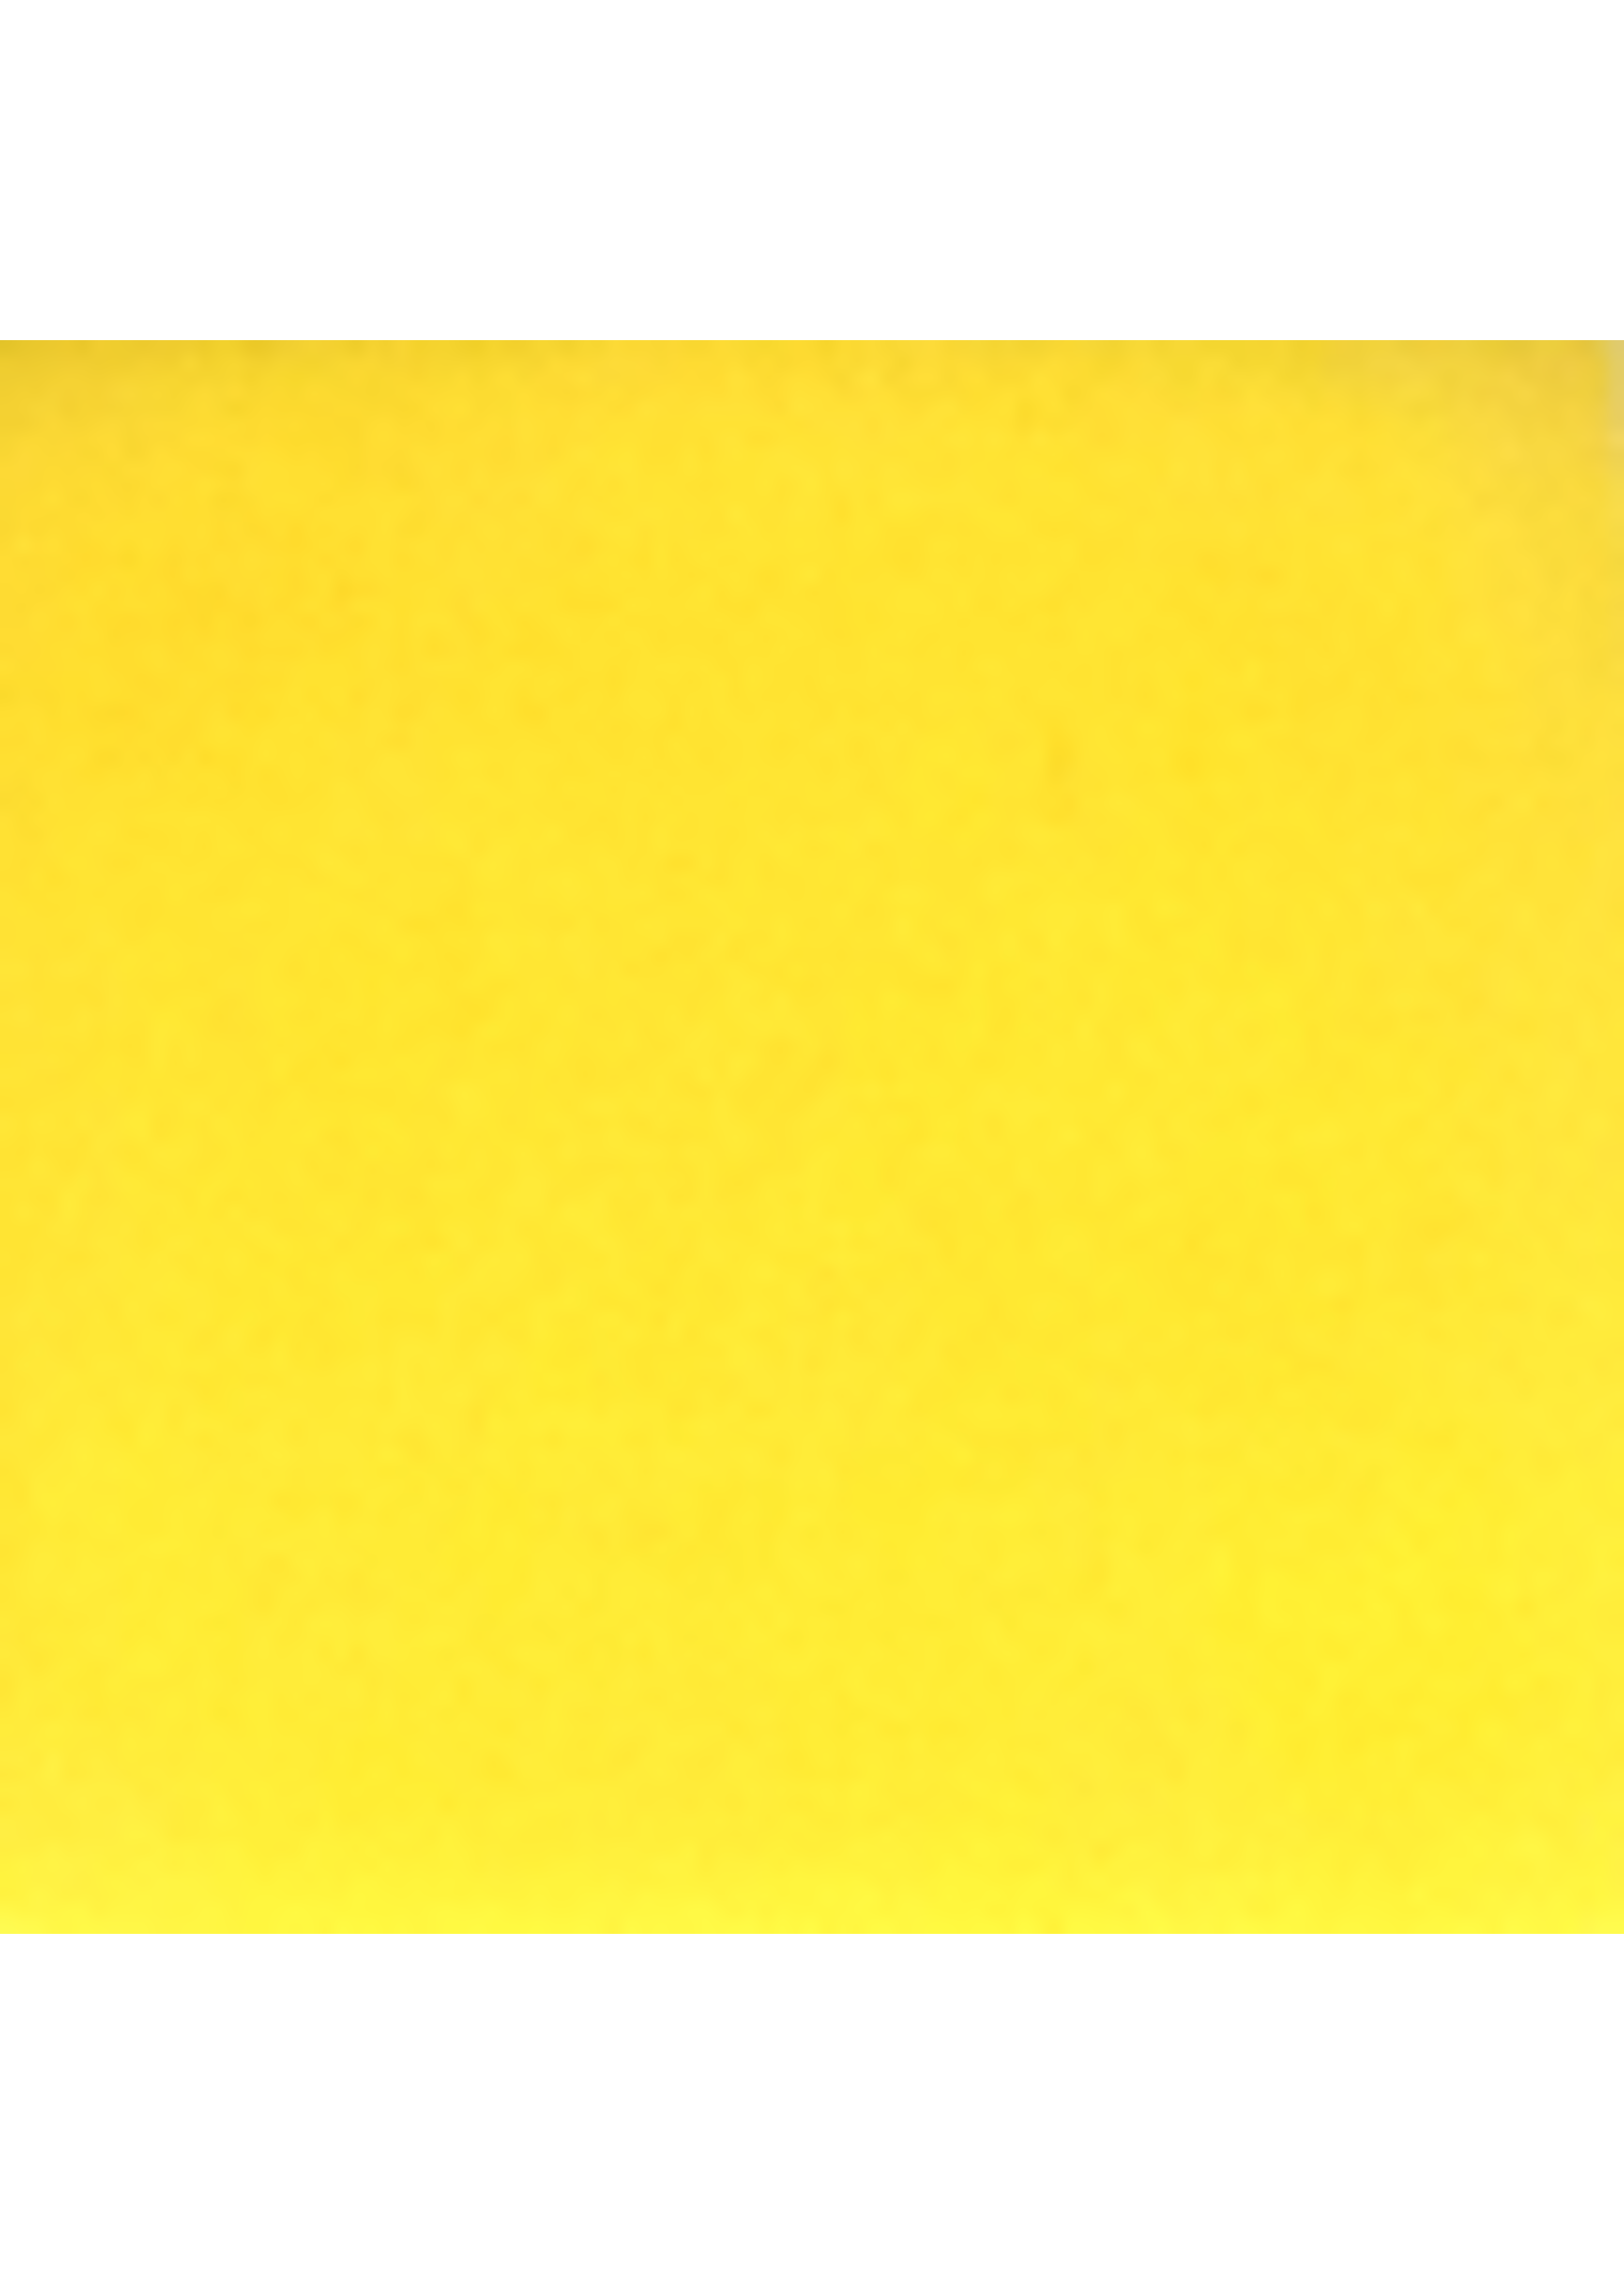 76,909 Wallpaper Lemon Yellow Images, Stock Photos & Vectors | Shutterstock